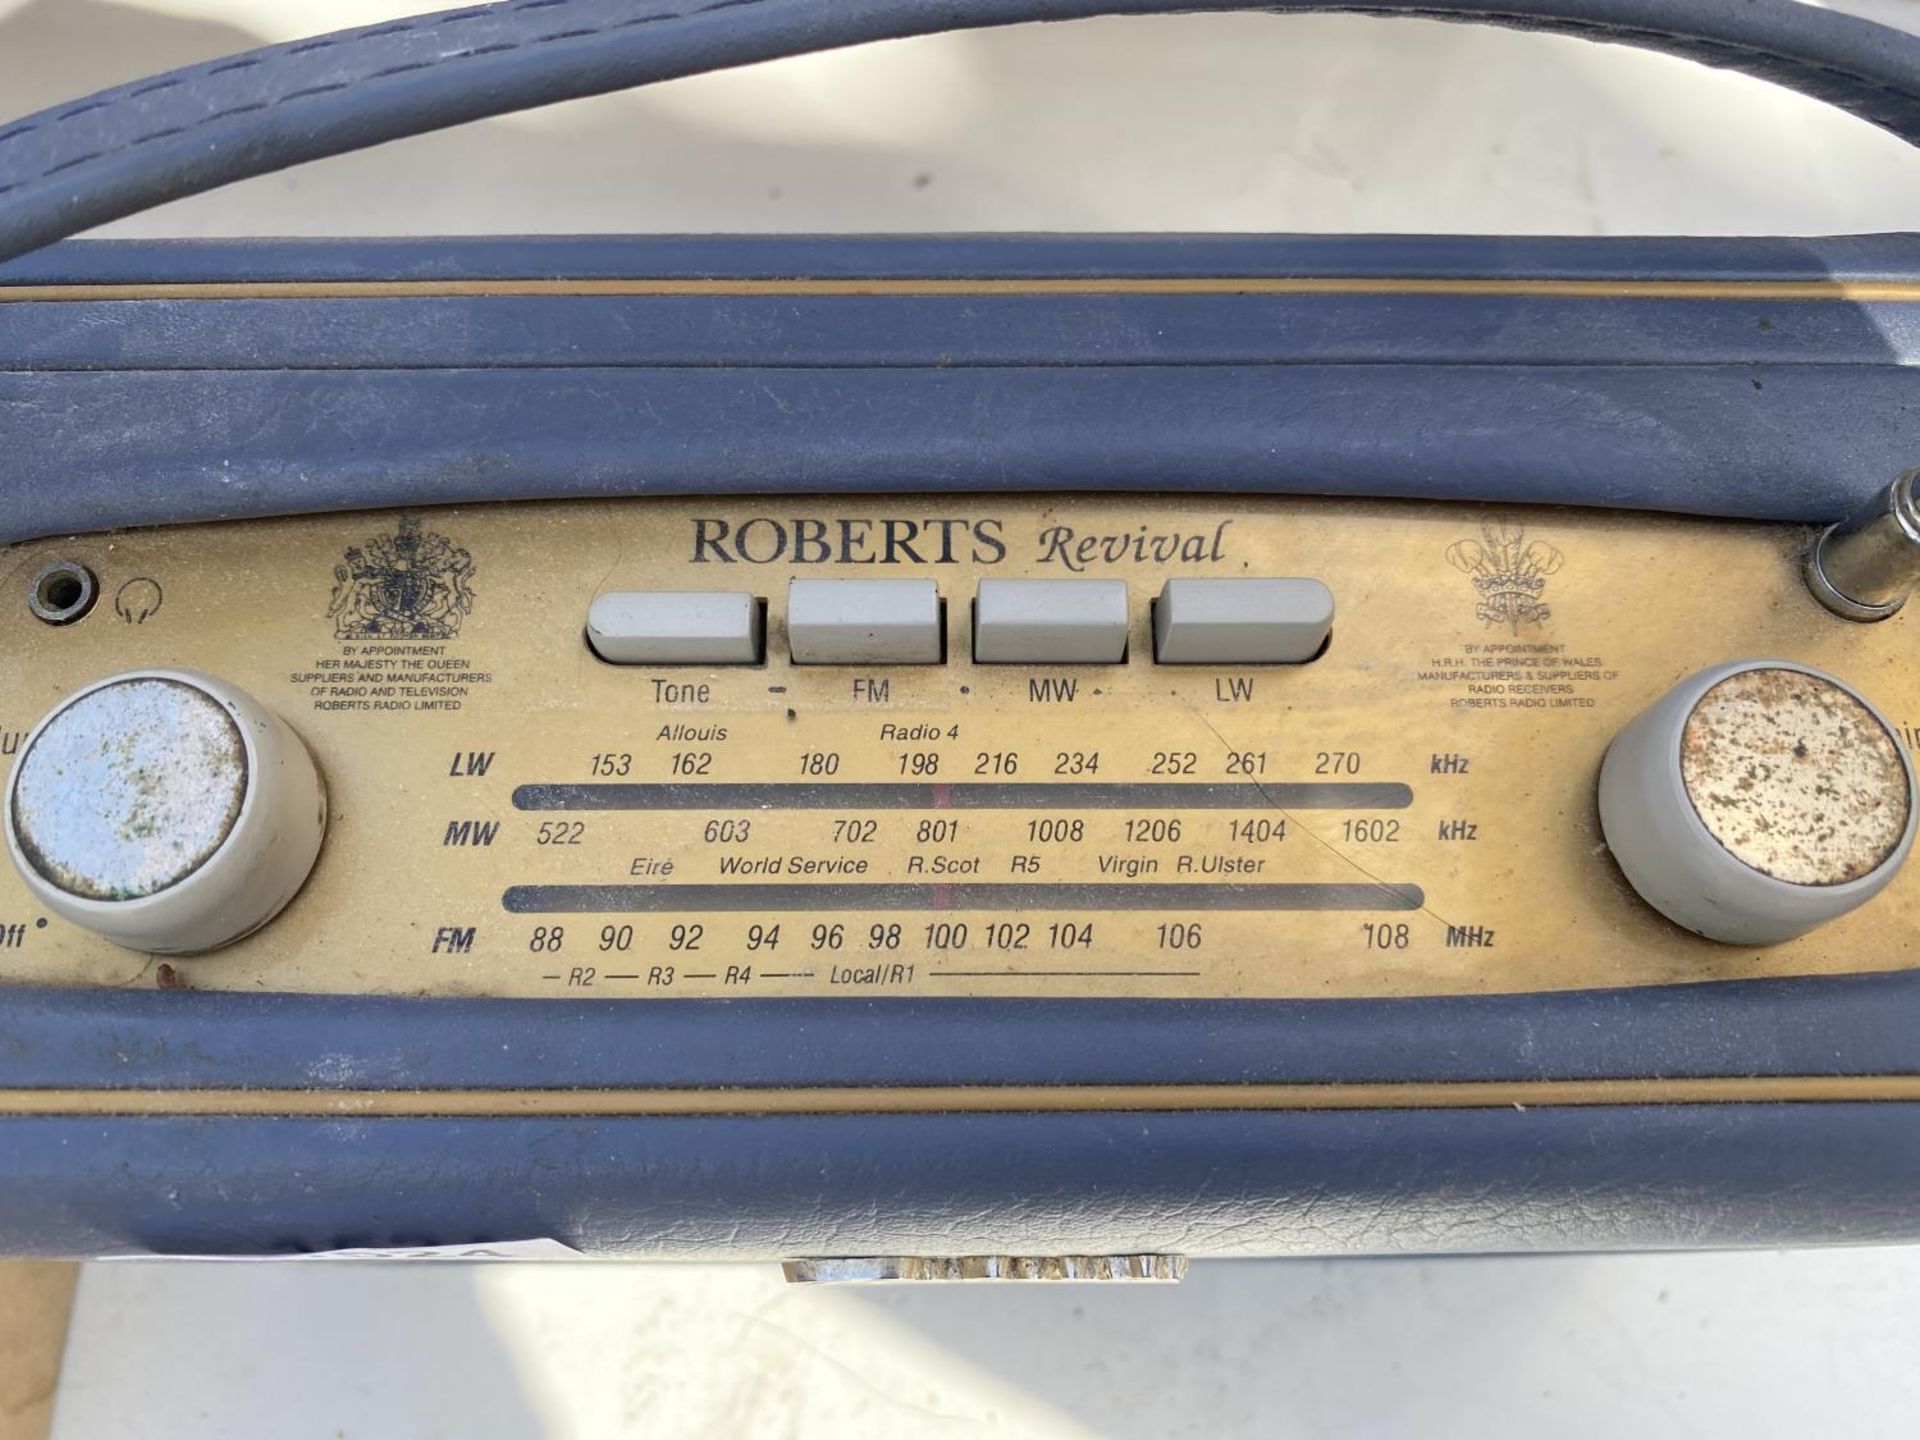 A ROBERTS REVIVAL RADIO - Image 2 of 2